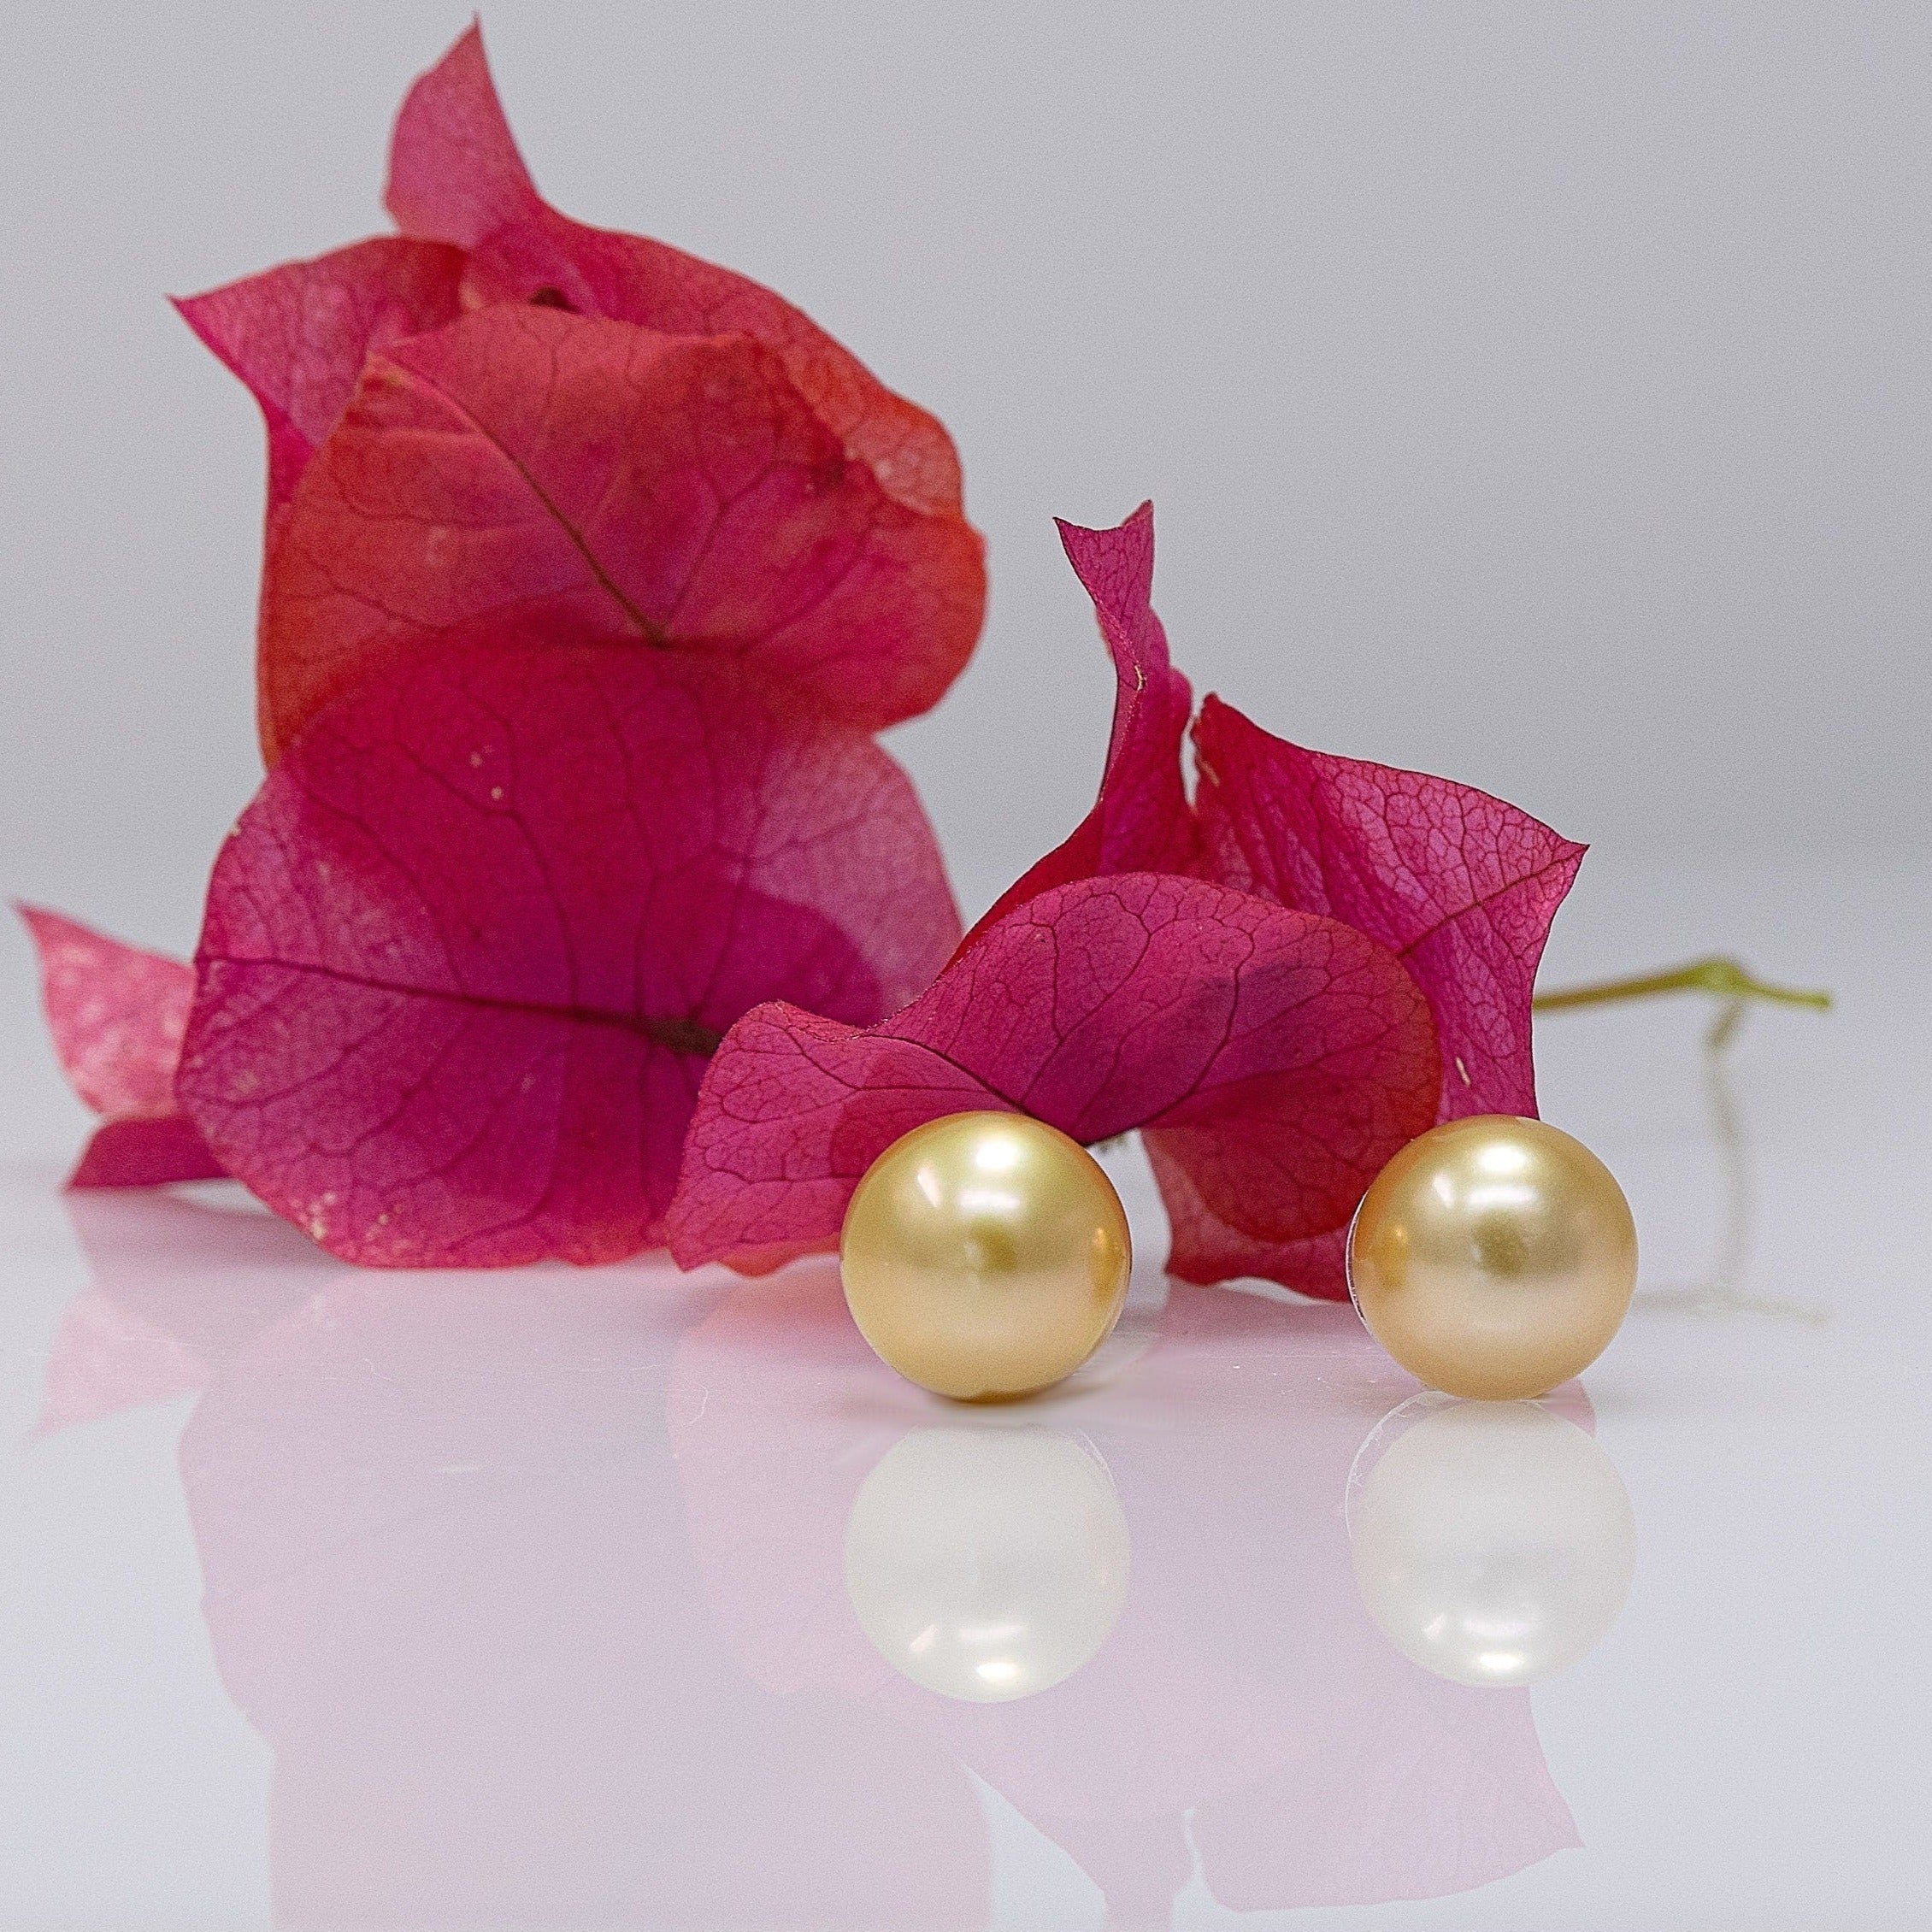 11-12mm Golden South Sea Pearl Stud Earrings - Marina Korneev Fine Pearls